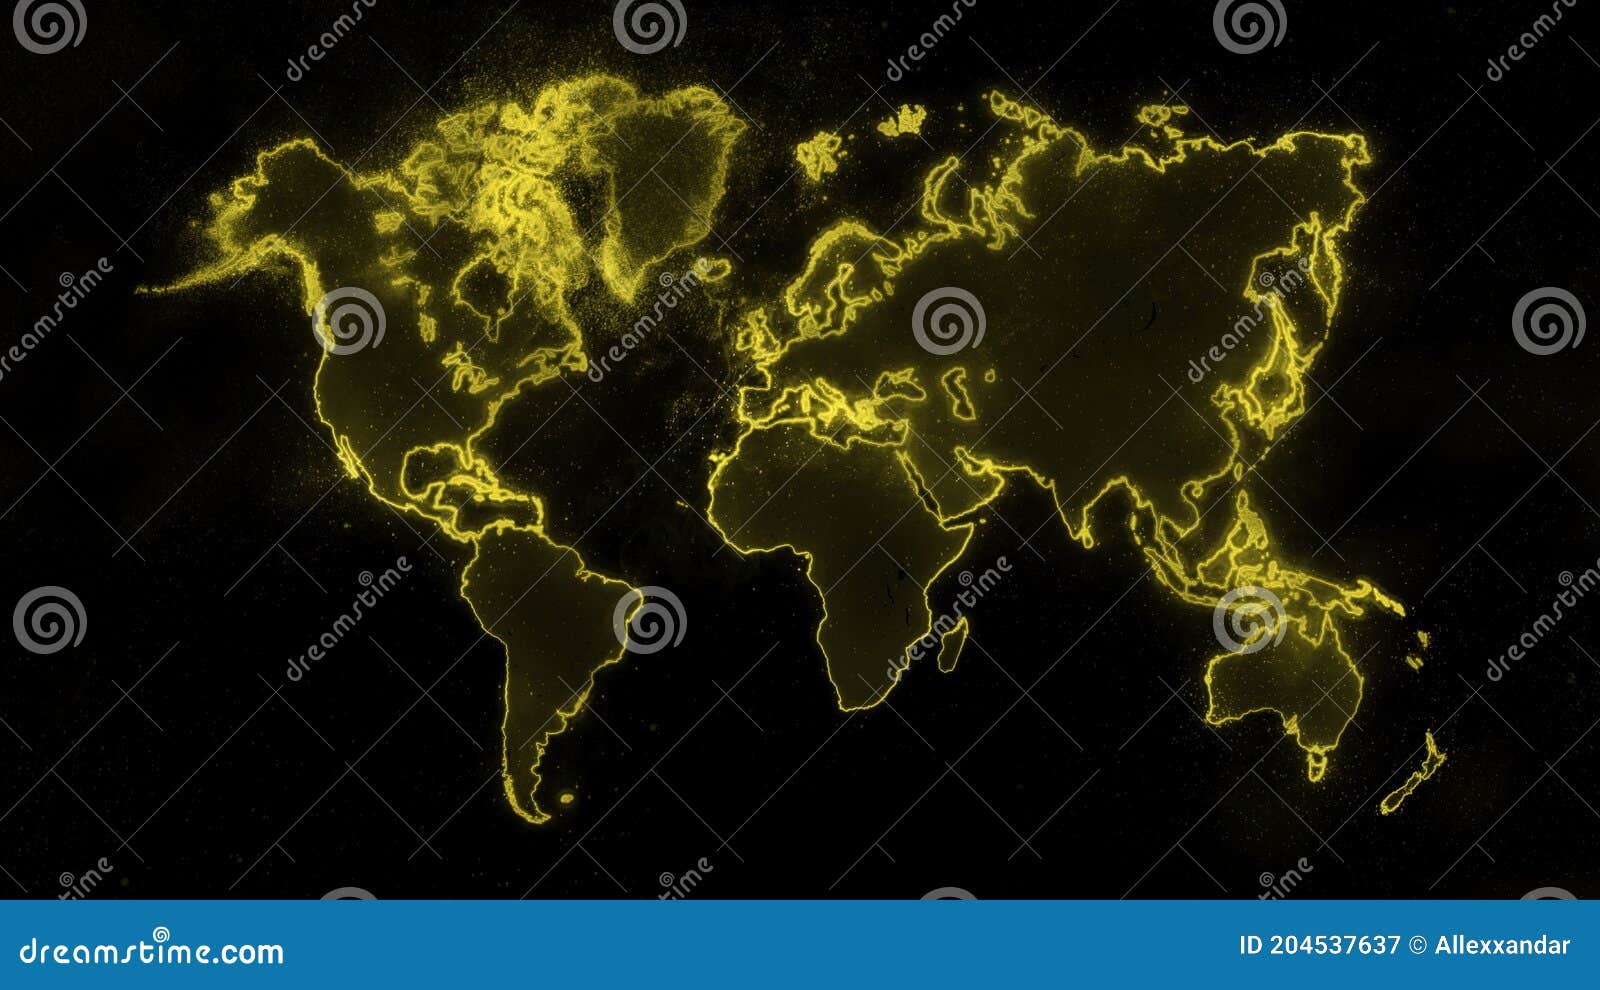 colorful worldÃÂ mapÃÂ on dark background, yellowÃÂ glowing world map